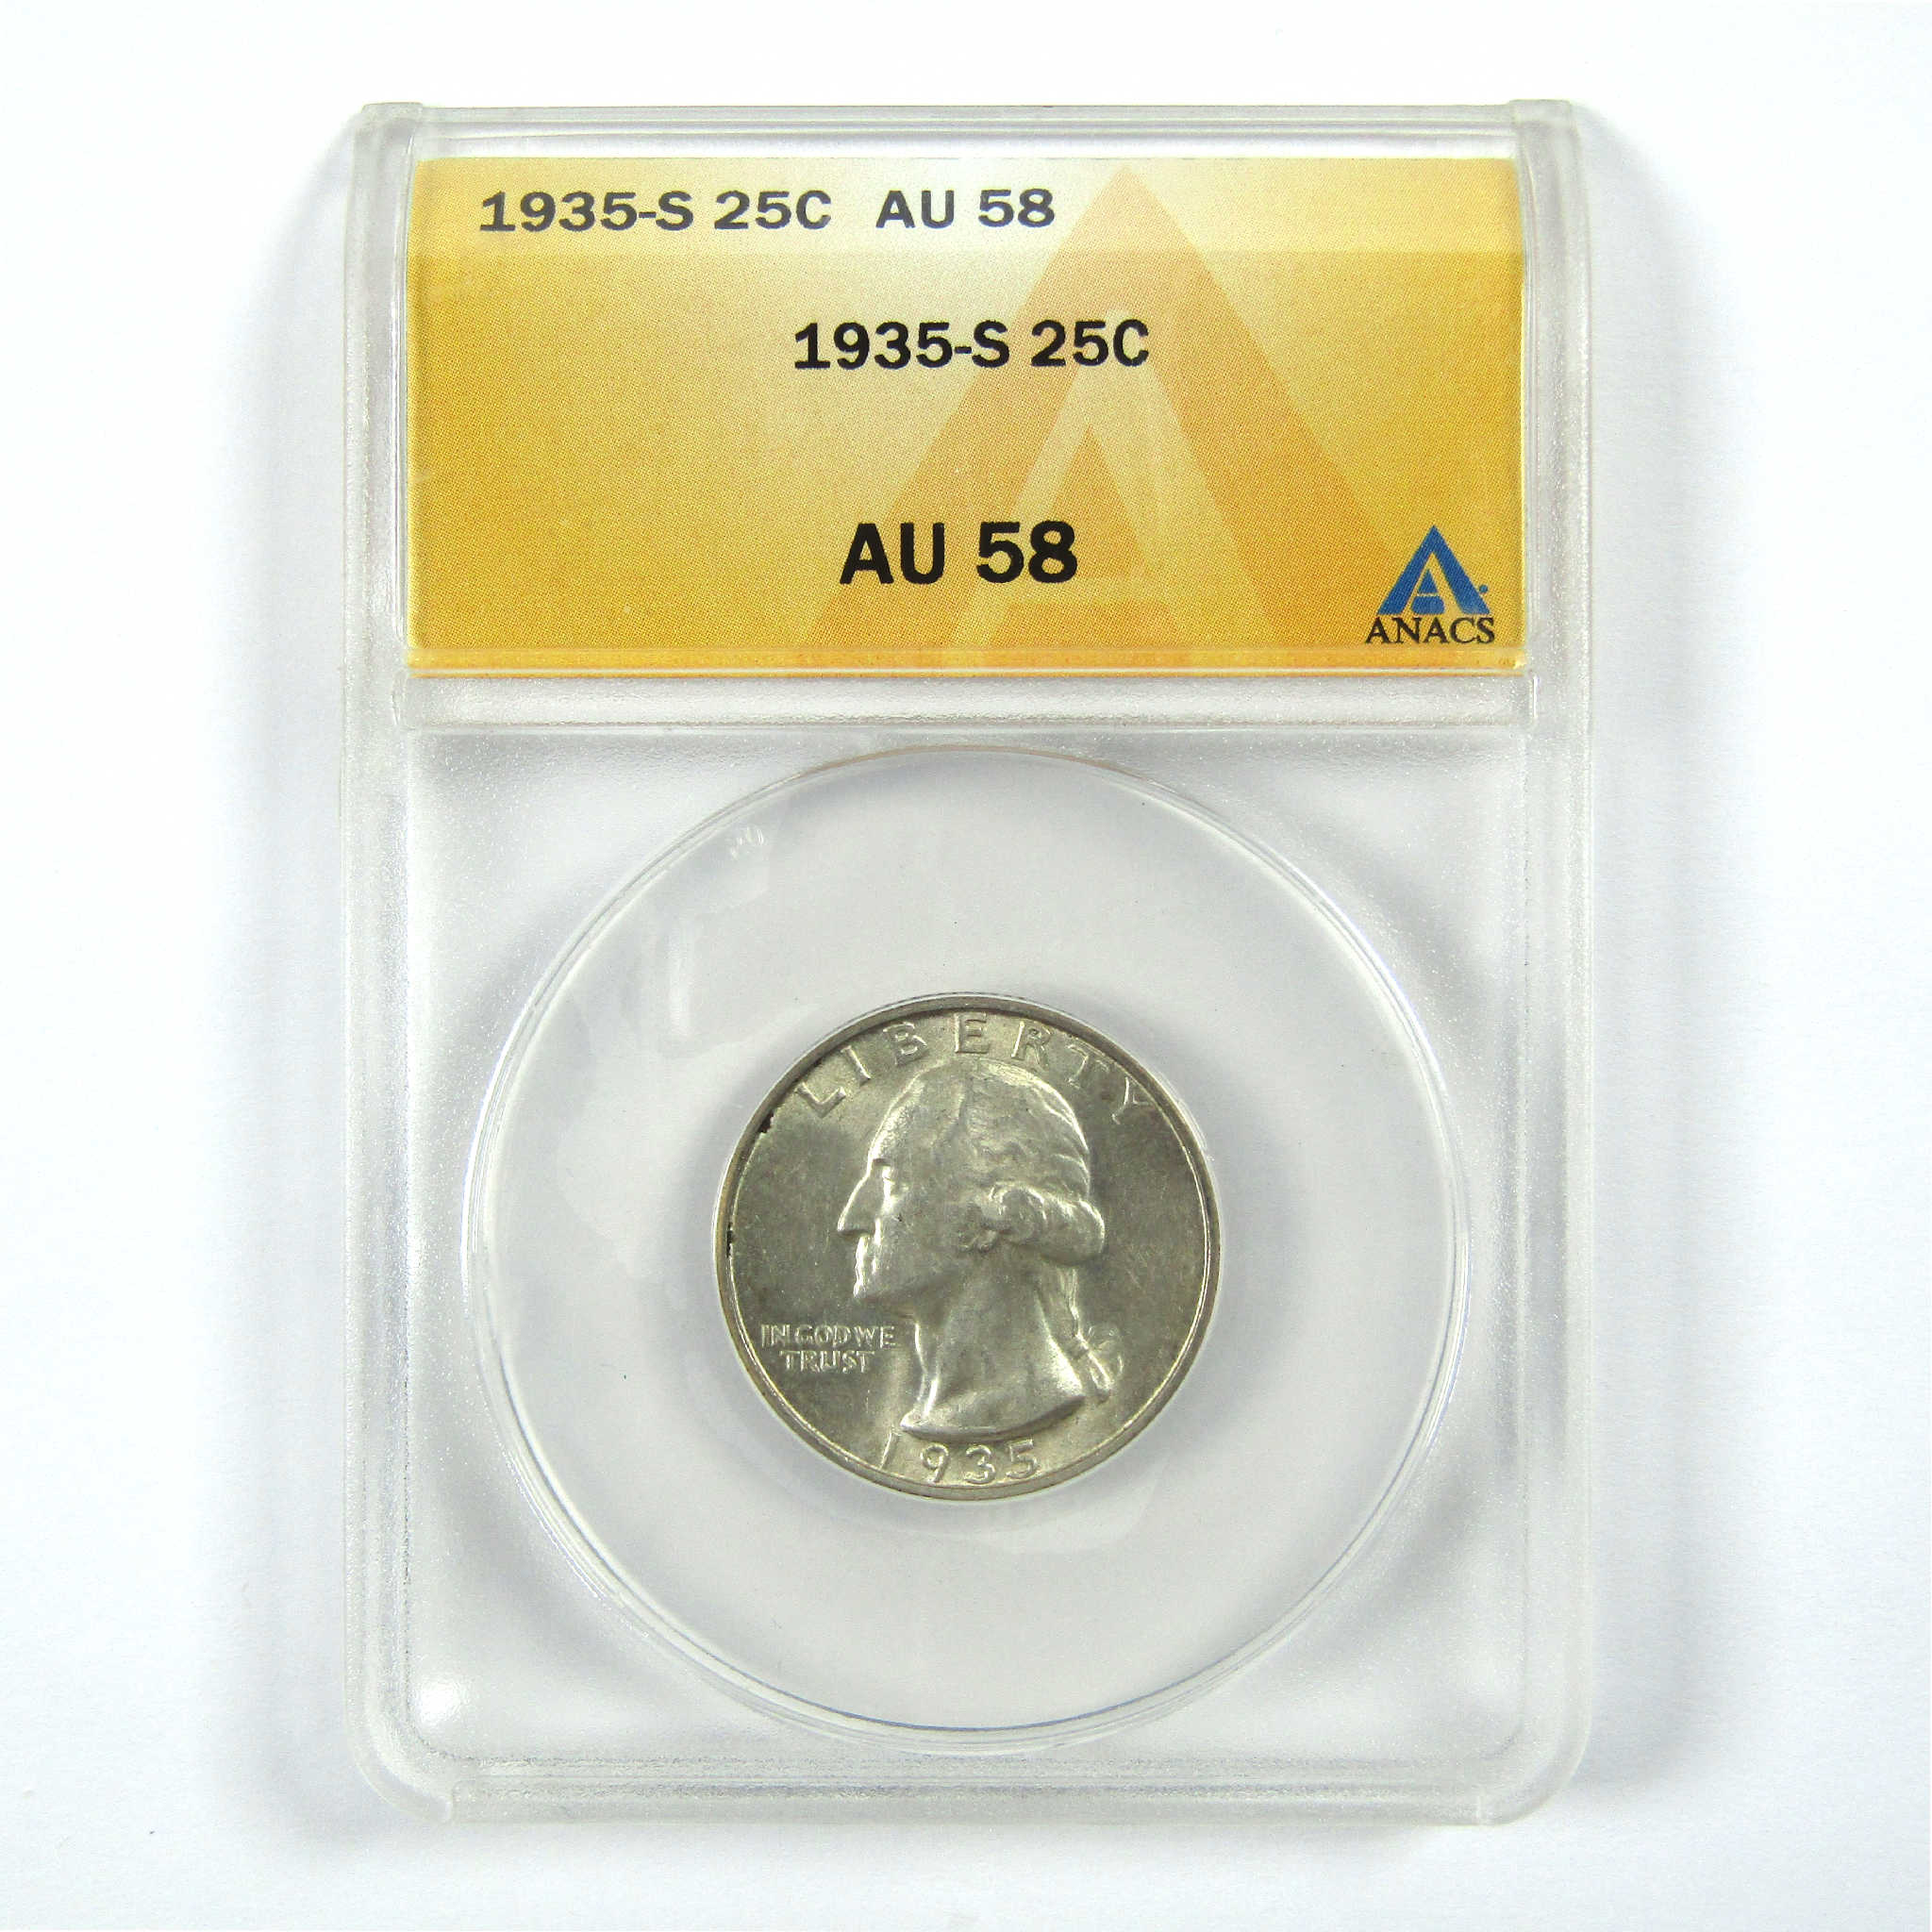 1935 S Washington Quarter AU 58 ANACS Silver 25c Coin SKU:I11900